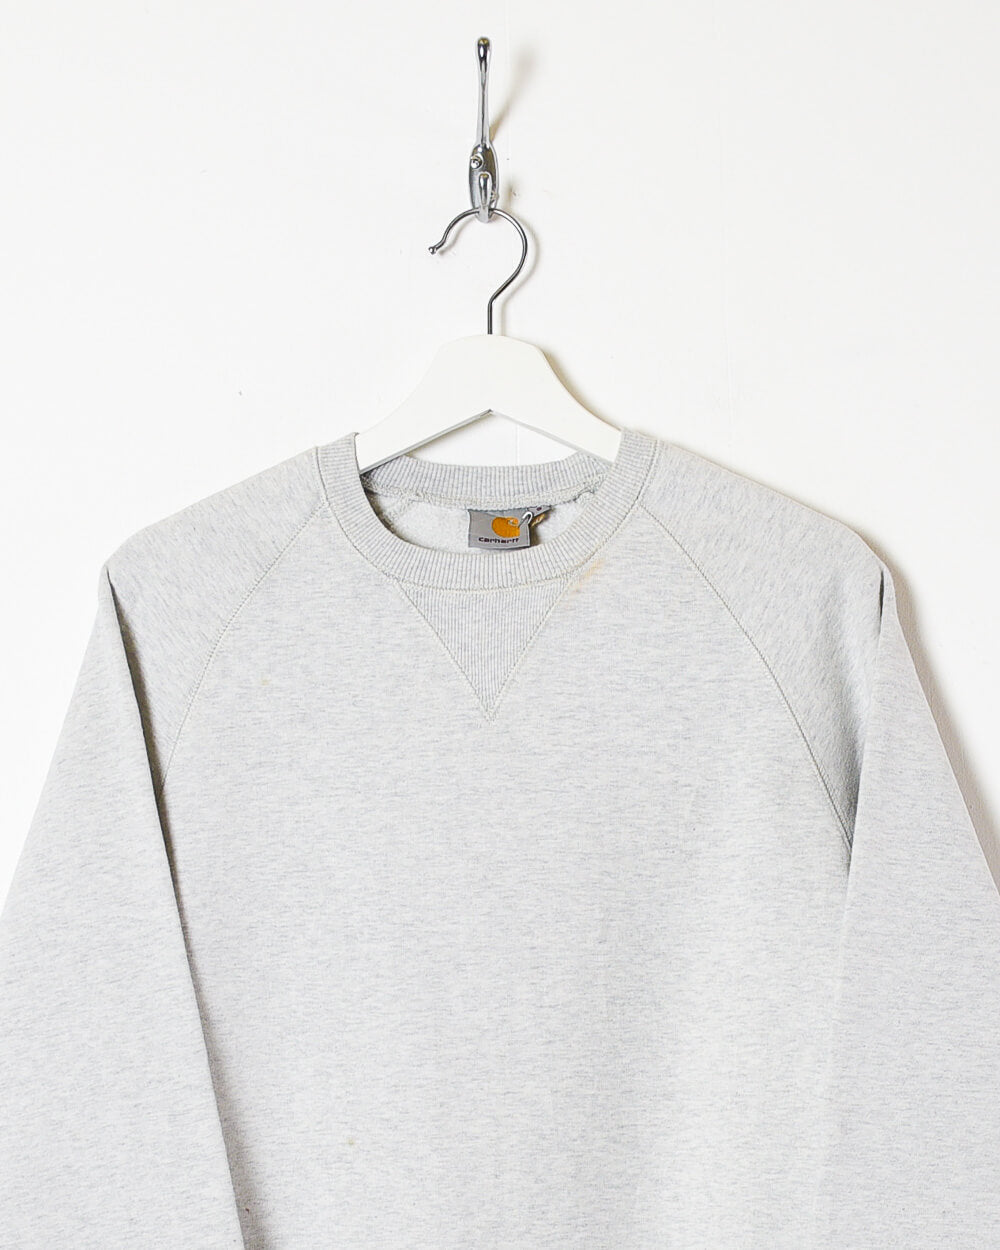 Stone Carhartt Sweatshirt - Small